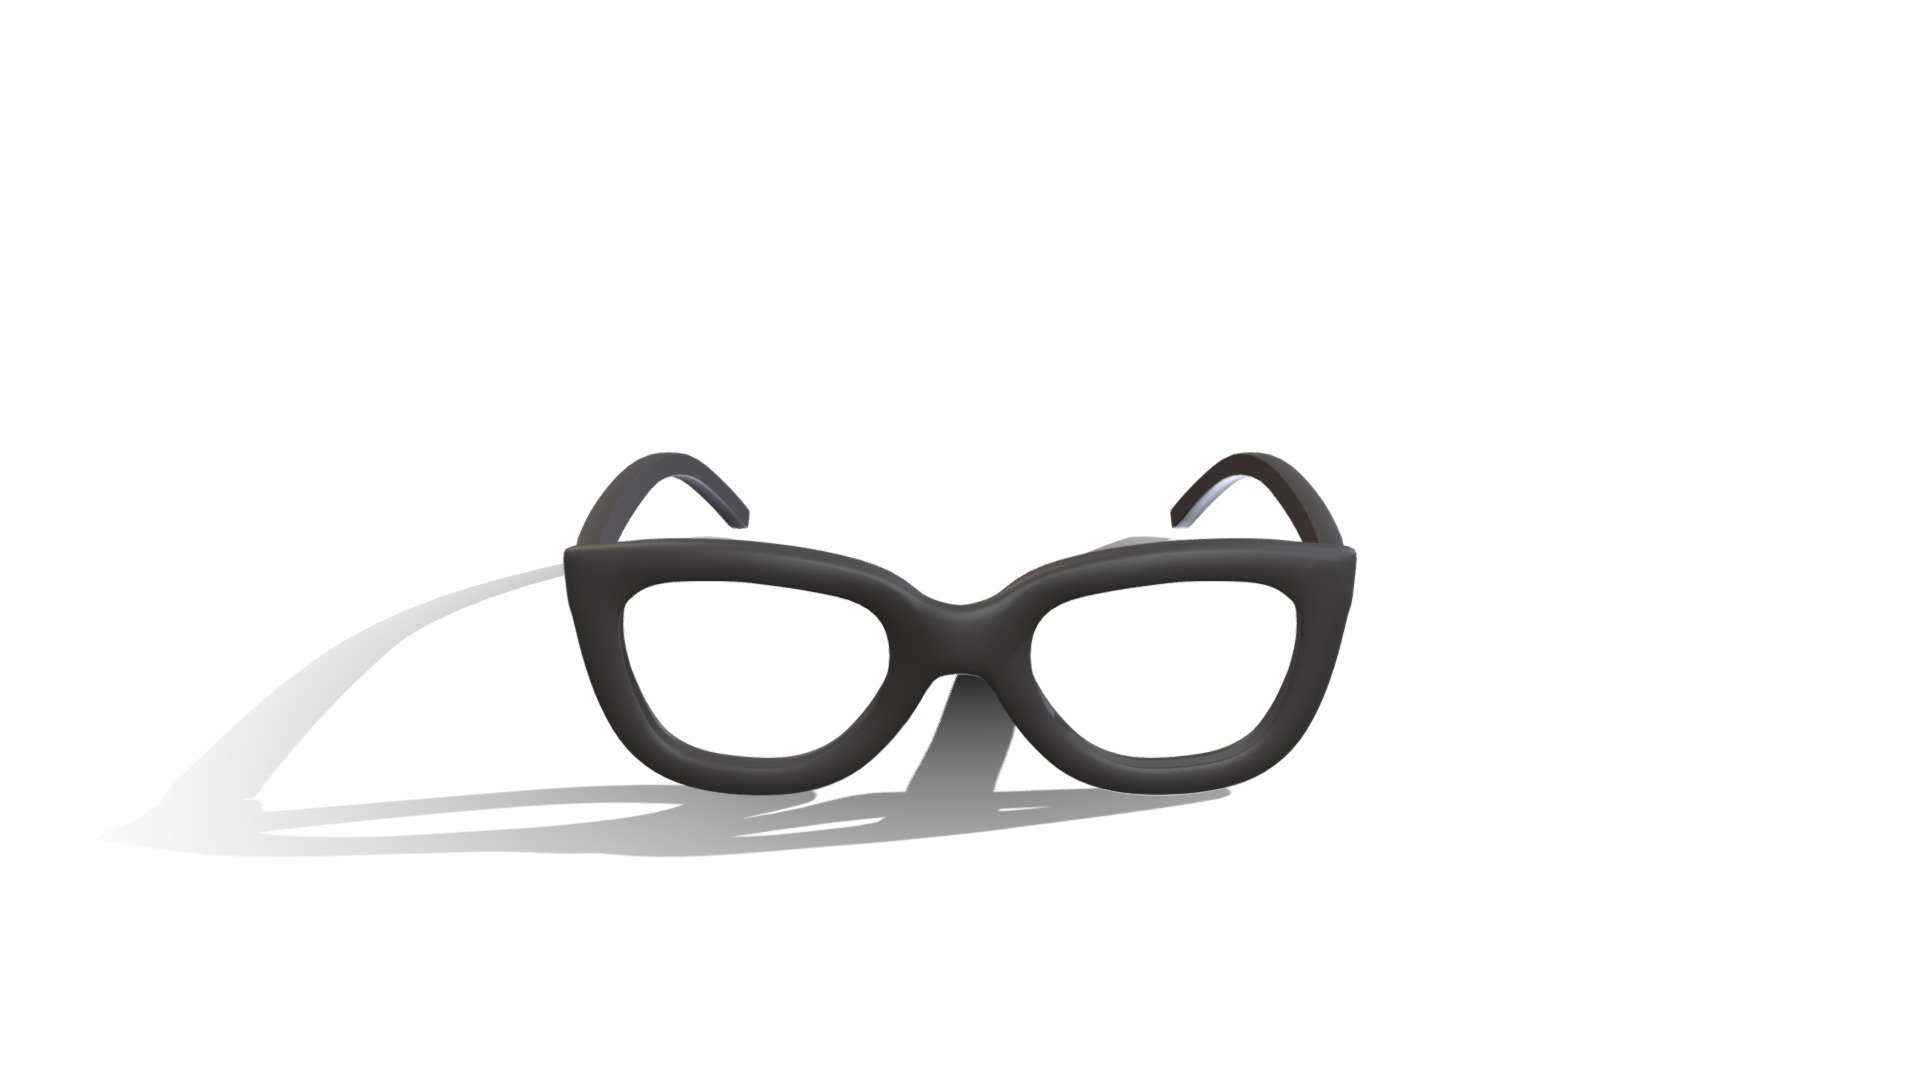 Square Glasses 3D Model For Download